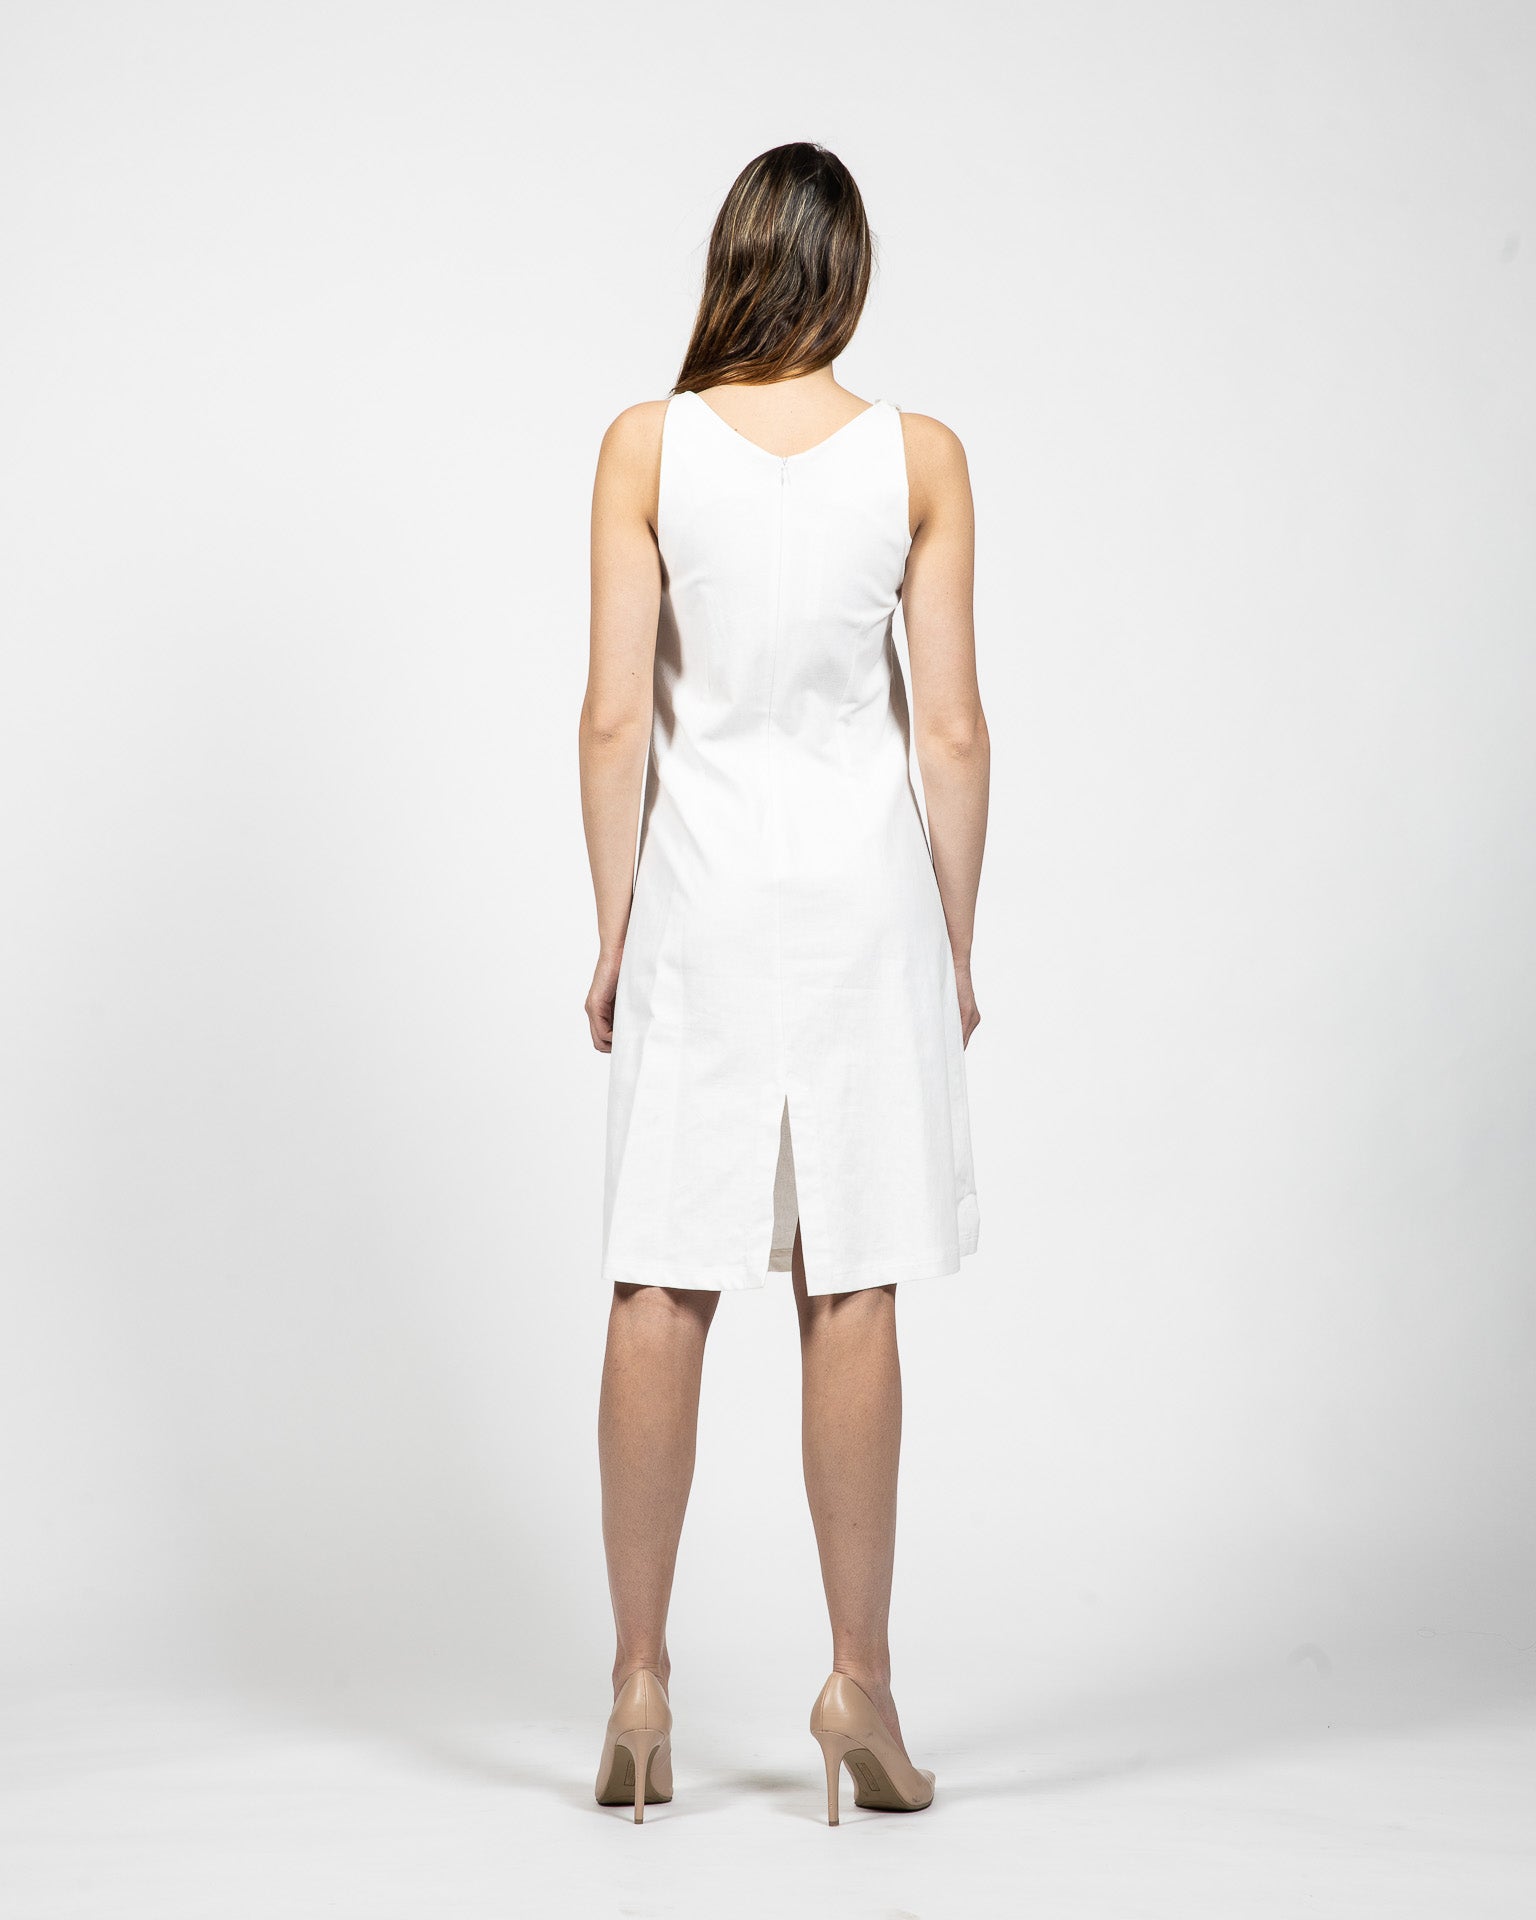 Scoop Neck White Linen Dress - Back View - Samuel Vartan